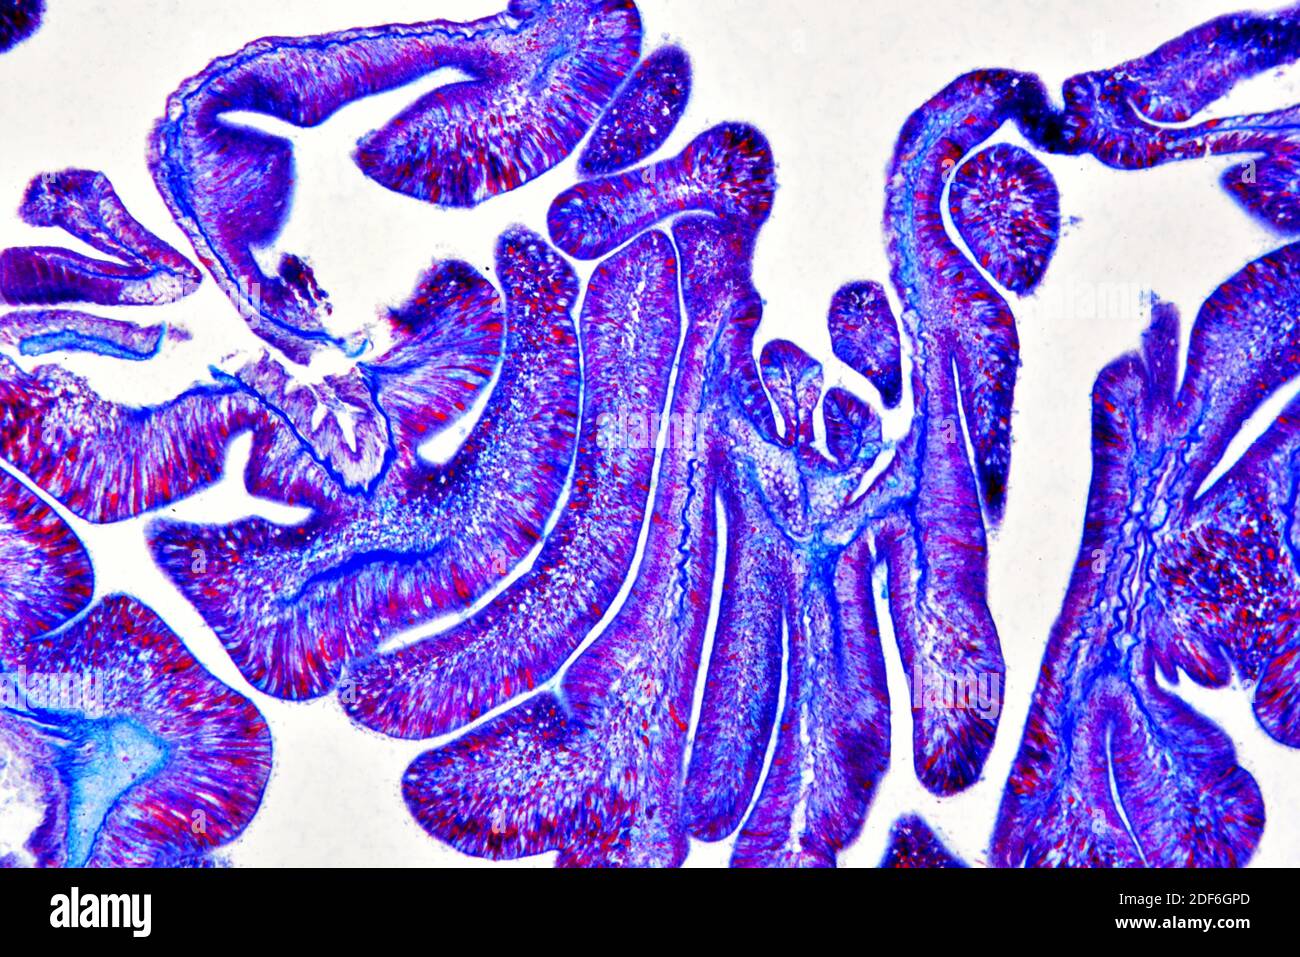 Sea anemone Actinia, longitudinal section showing septa. Optical microscope X100. Stock Photo